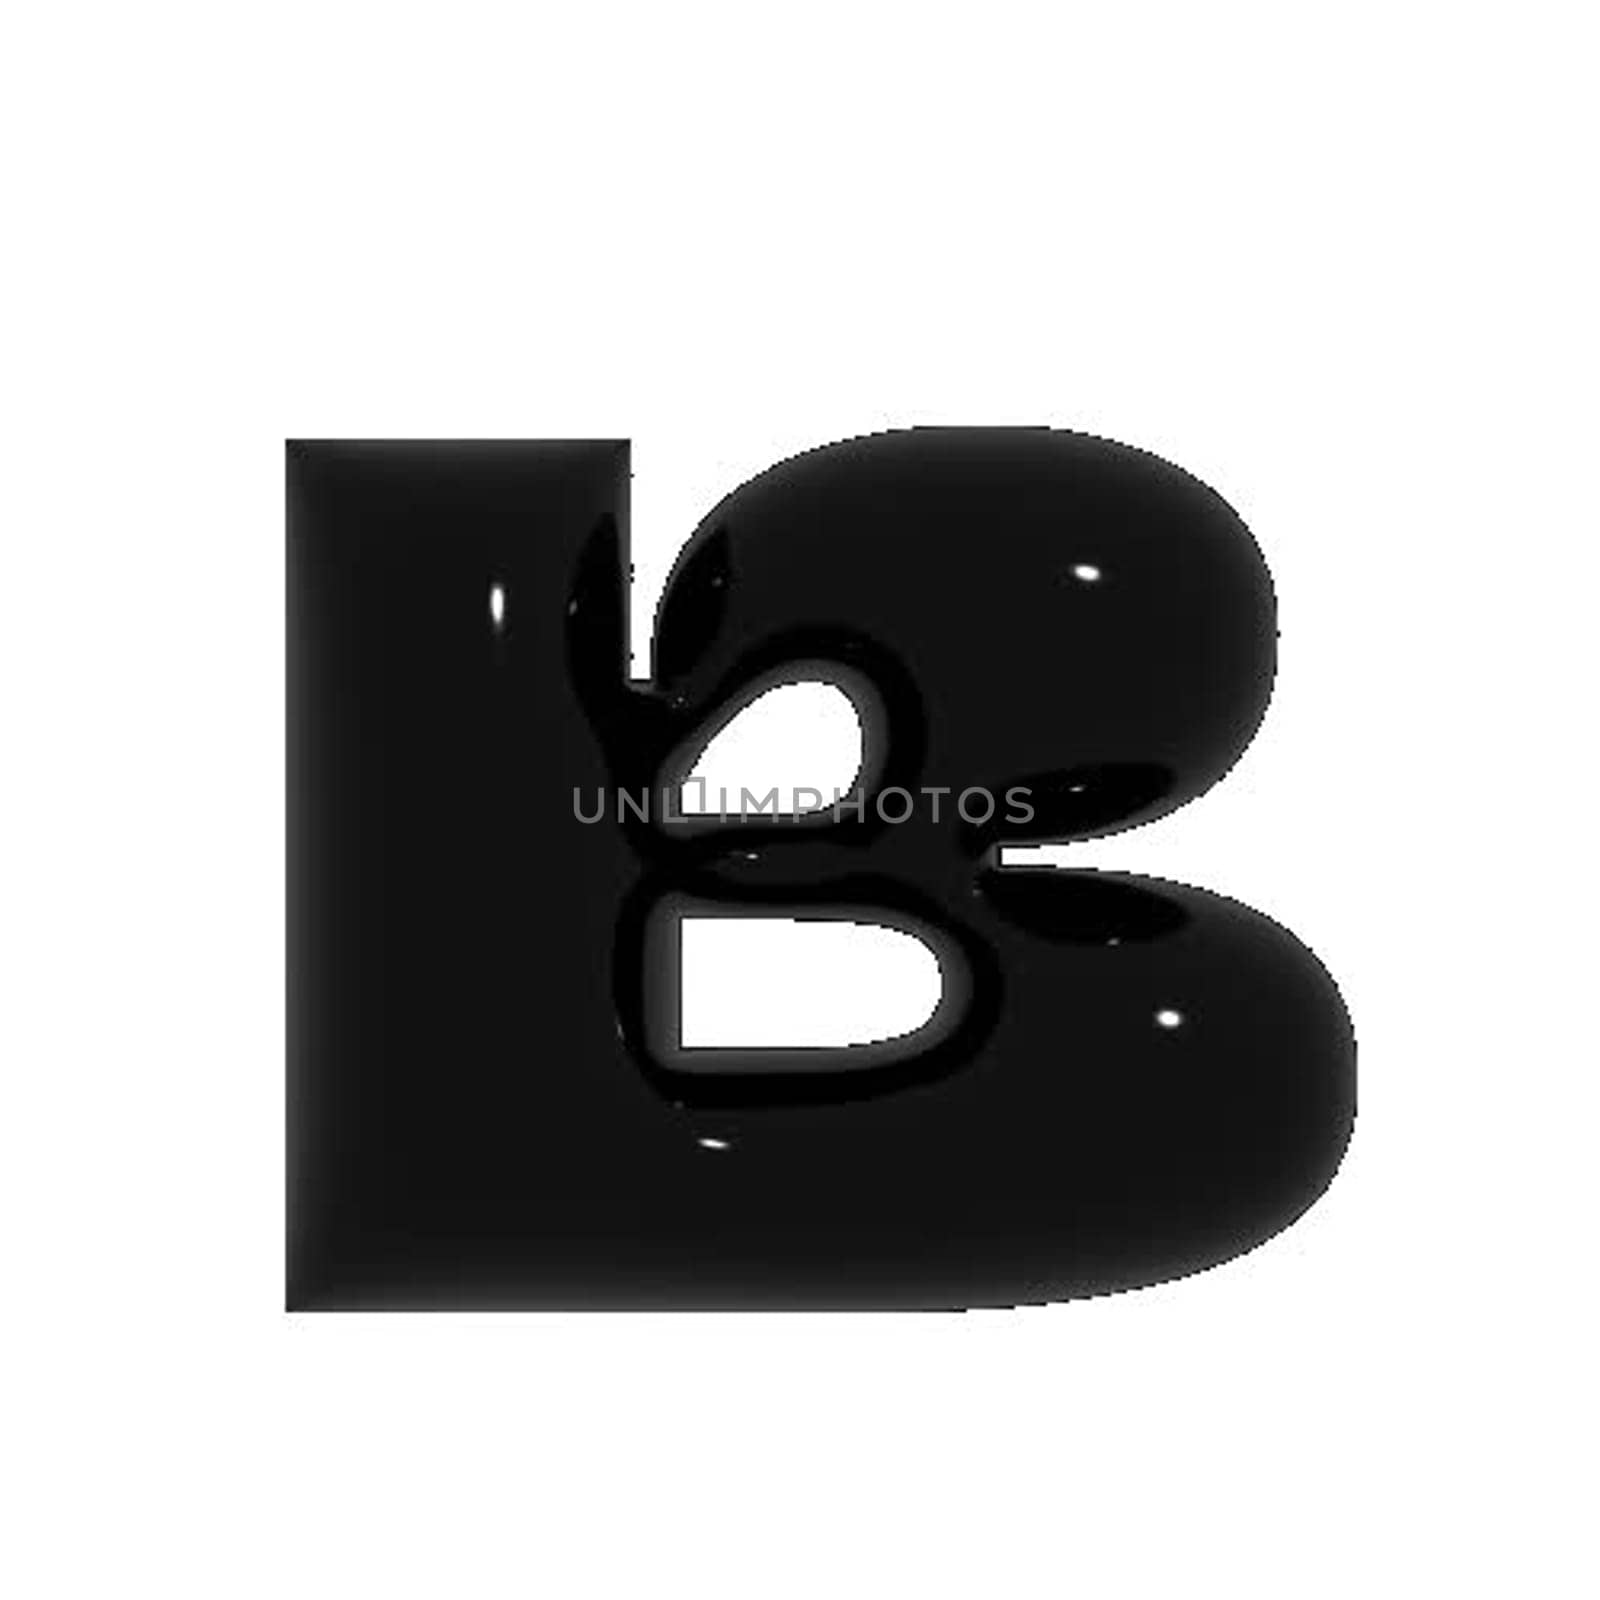 Black metal shiny reflective letter B 3D illustration by Dustick